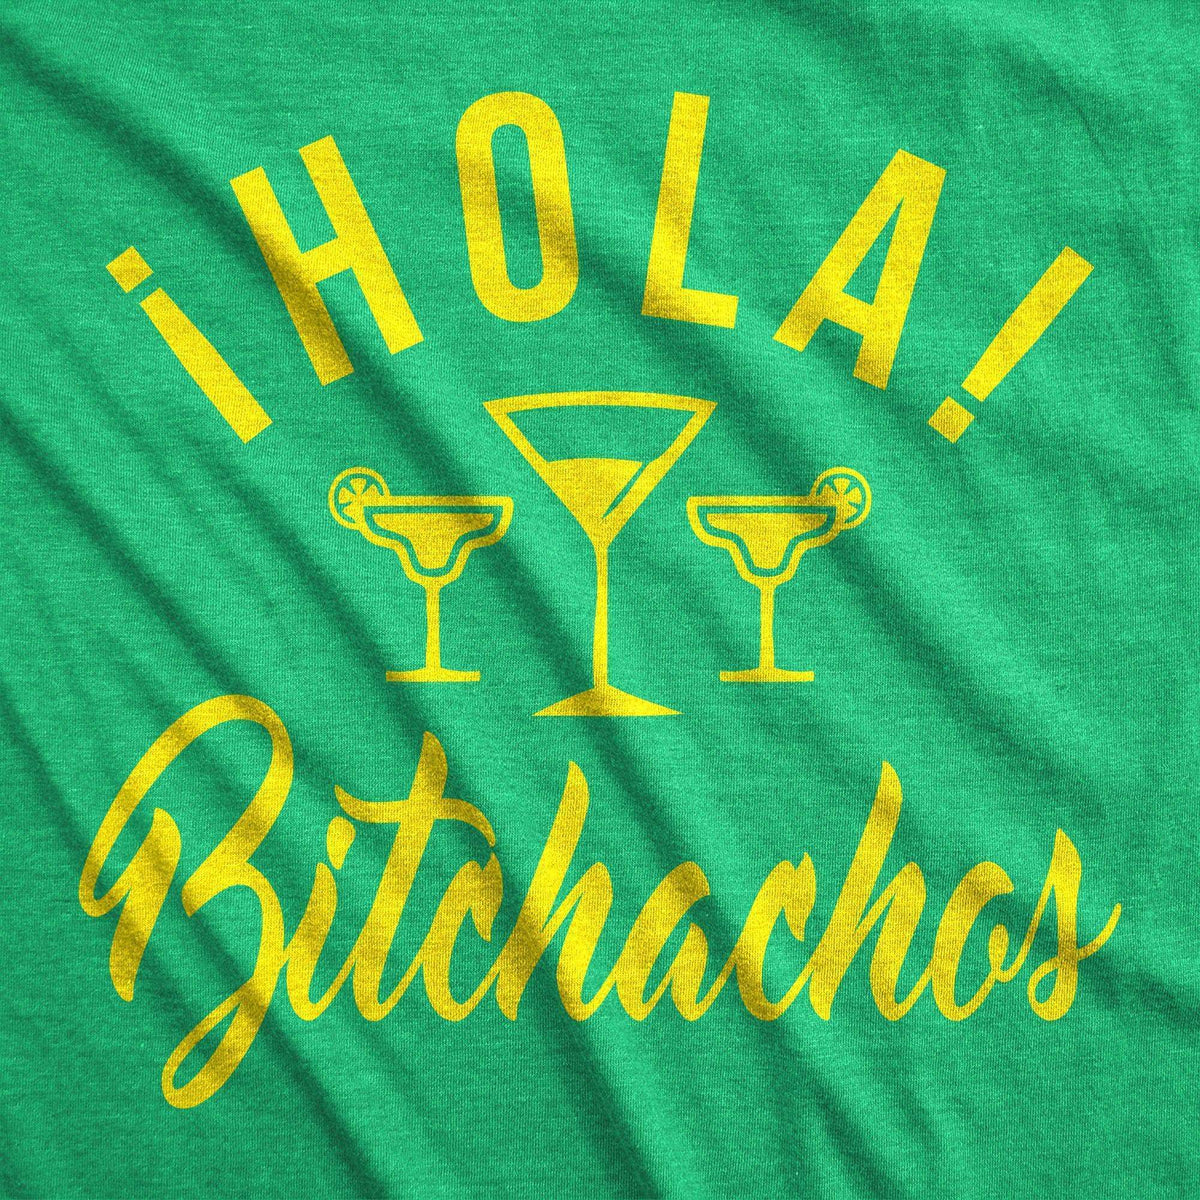 Hola Bitchachos Men&#39;s Tshirt  -  Crazy Dog T-Shirts